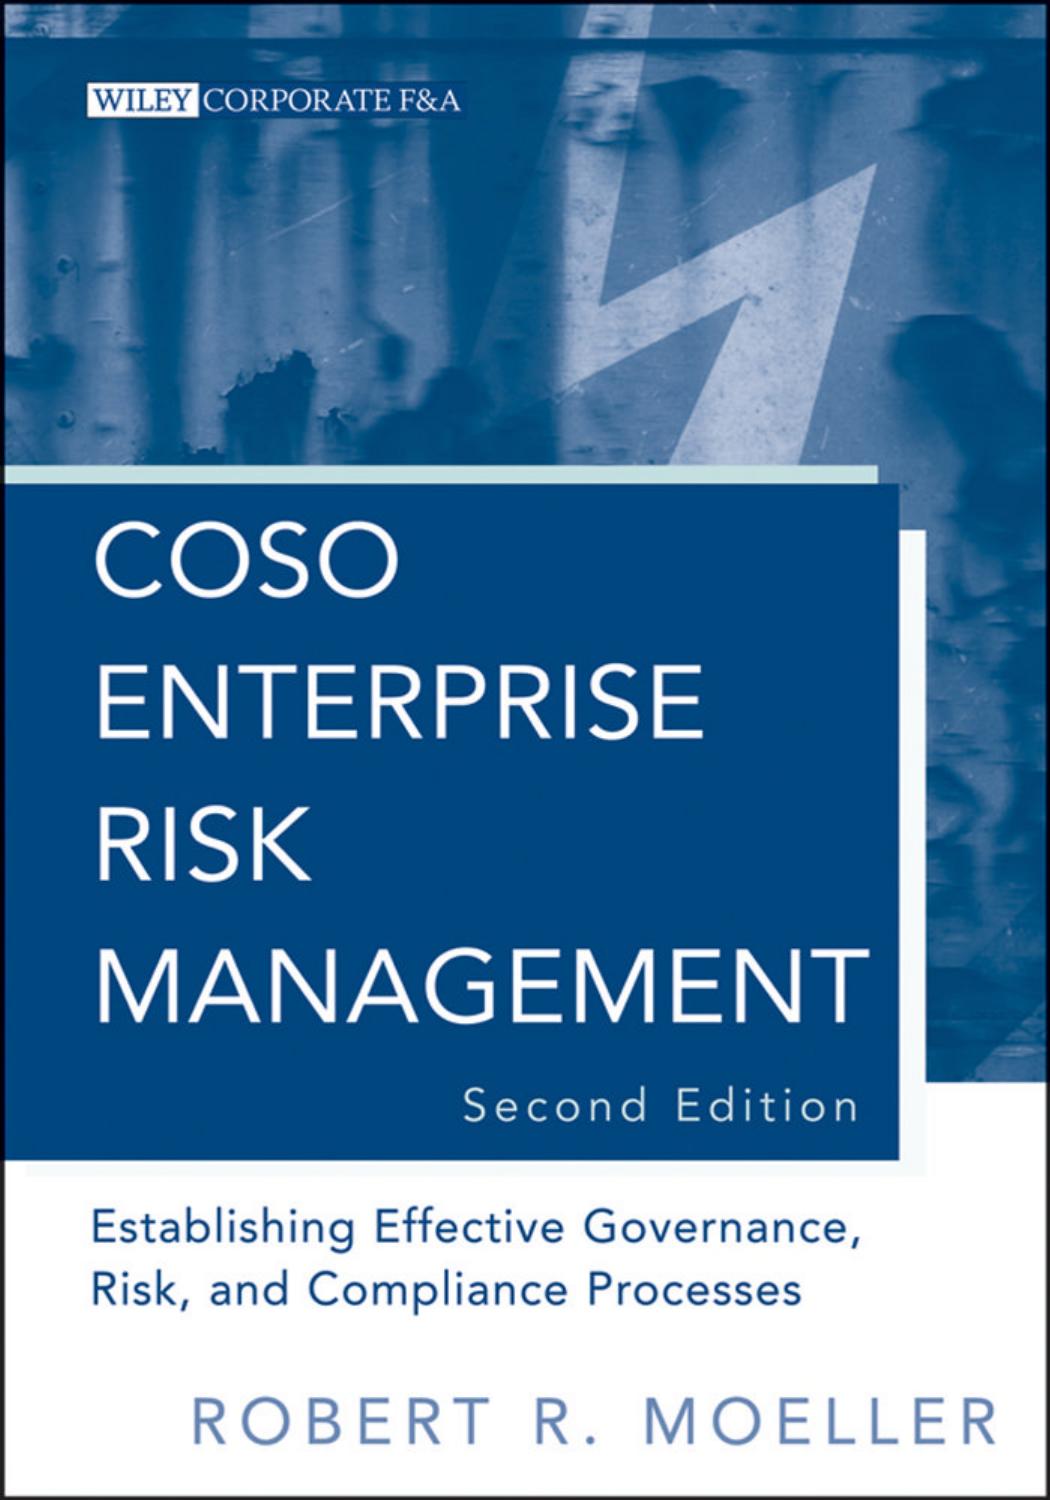 COSO Enterprise Risk Management Establishing Effective Governance, Risk, and Compliance Processes.jpg